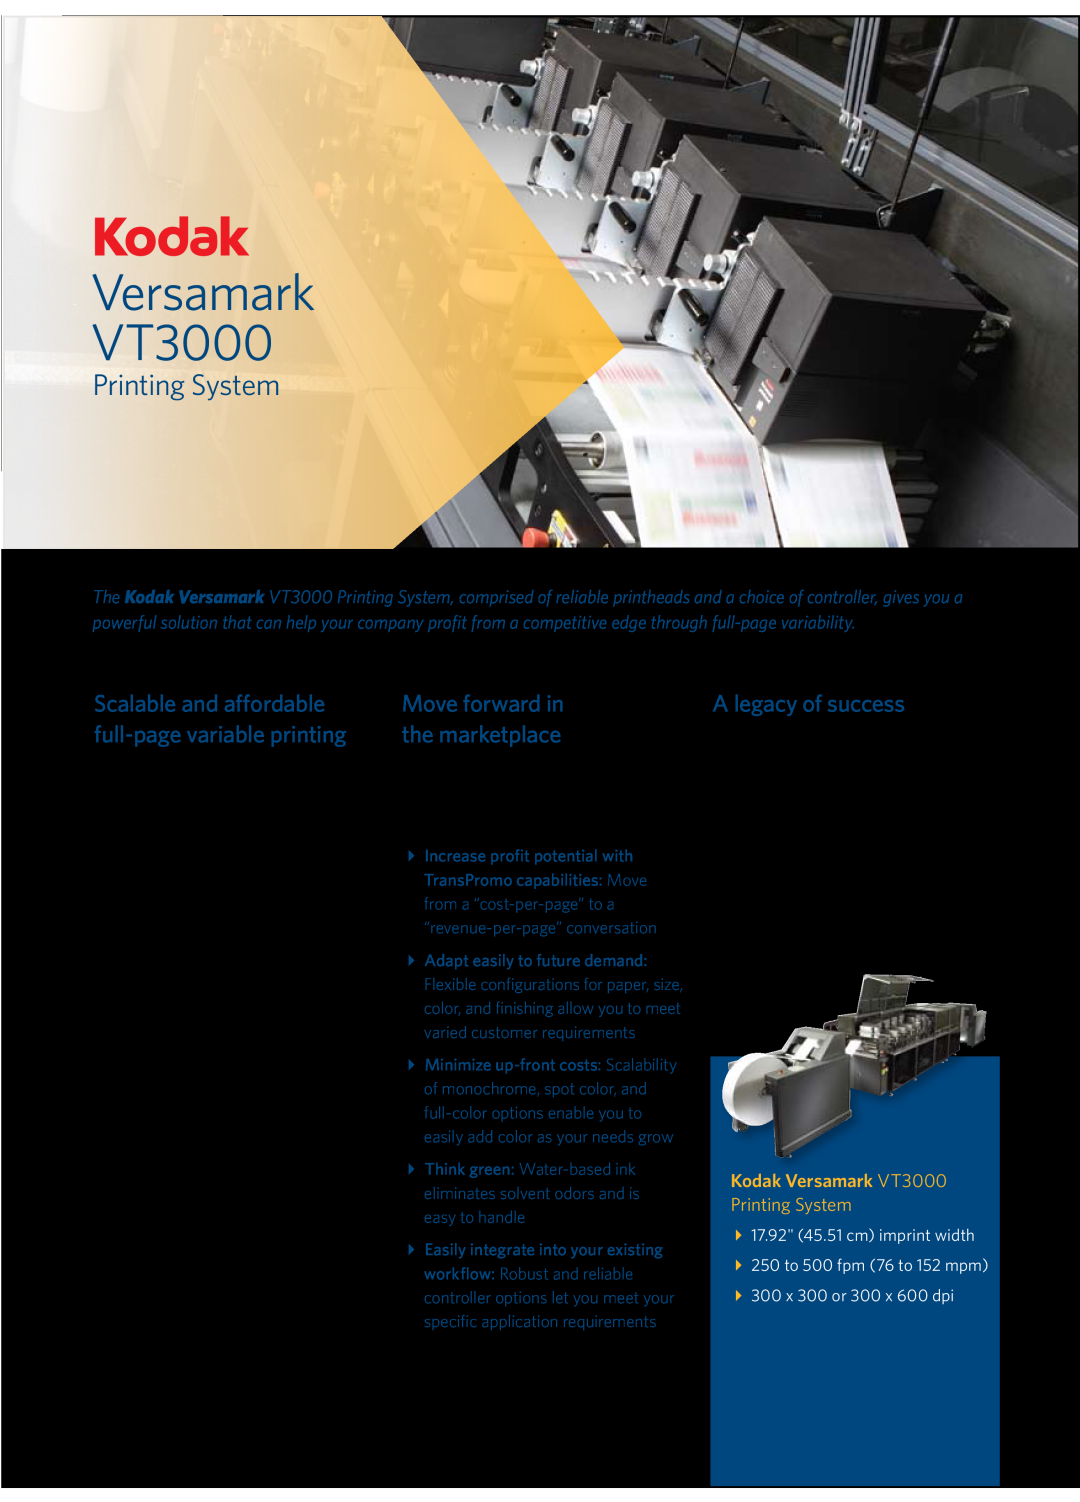 Kodak manual in the expanding TransPromo print market, Versamark VT3000, Printing System, A legacy of success 